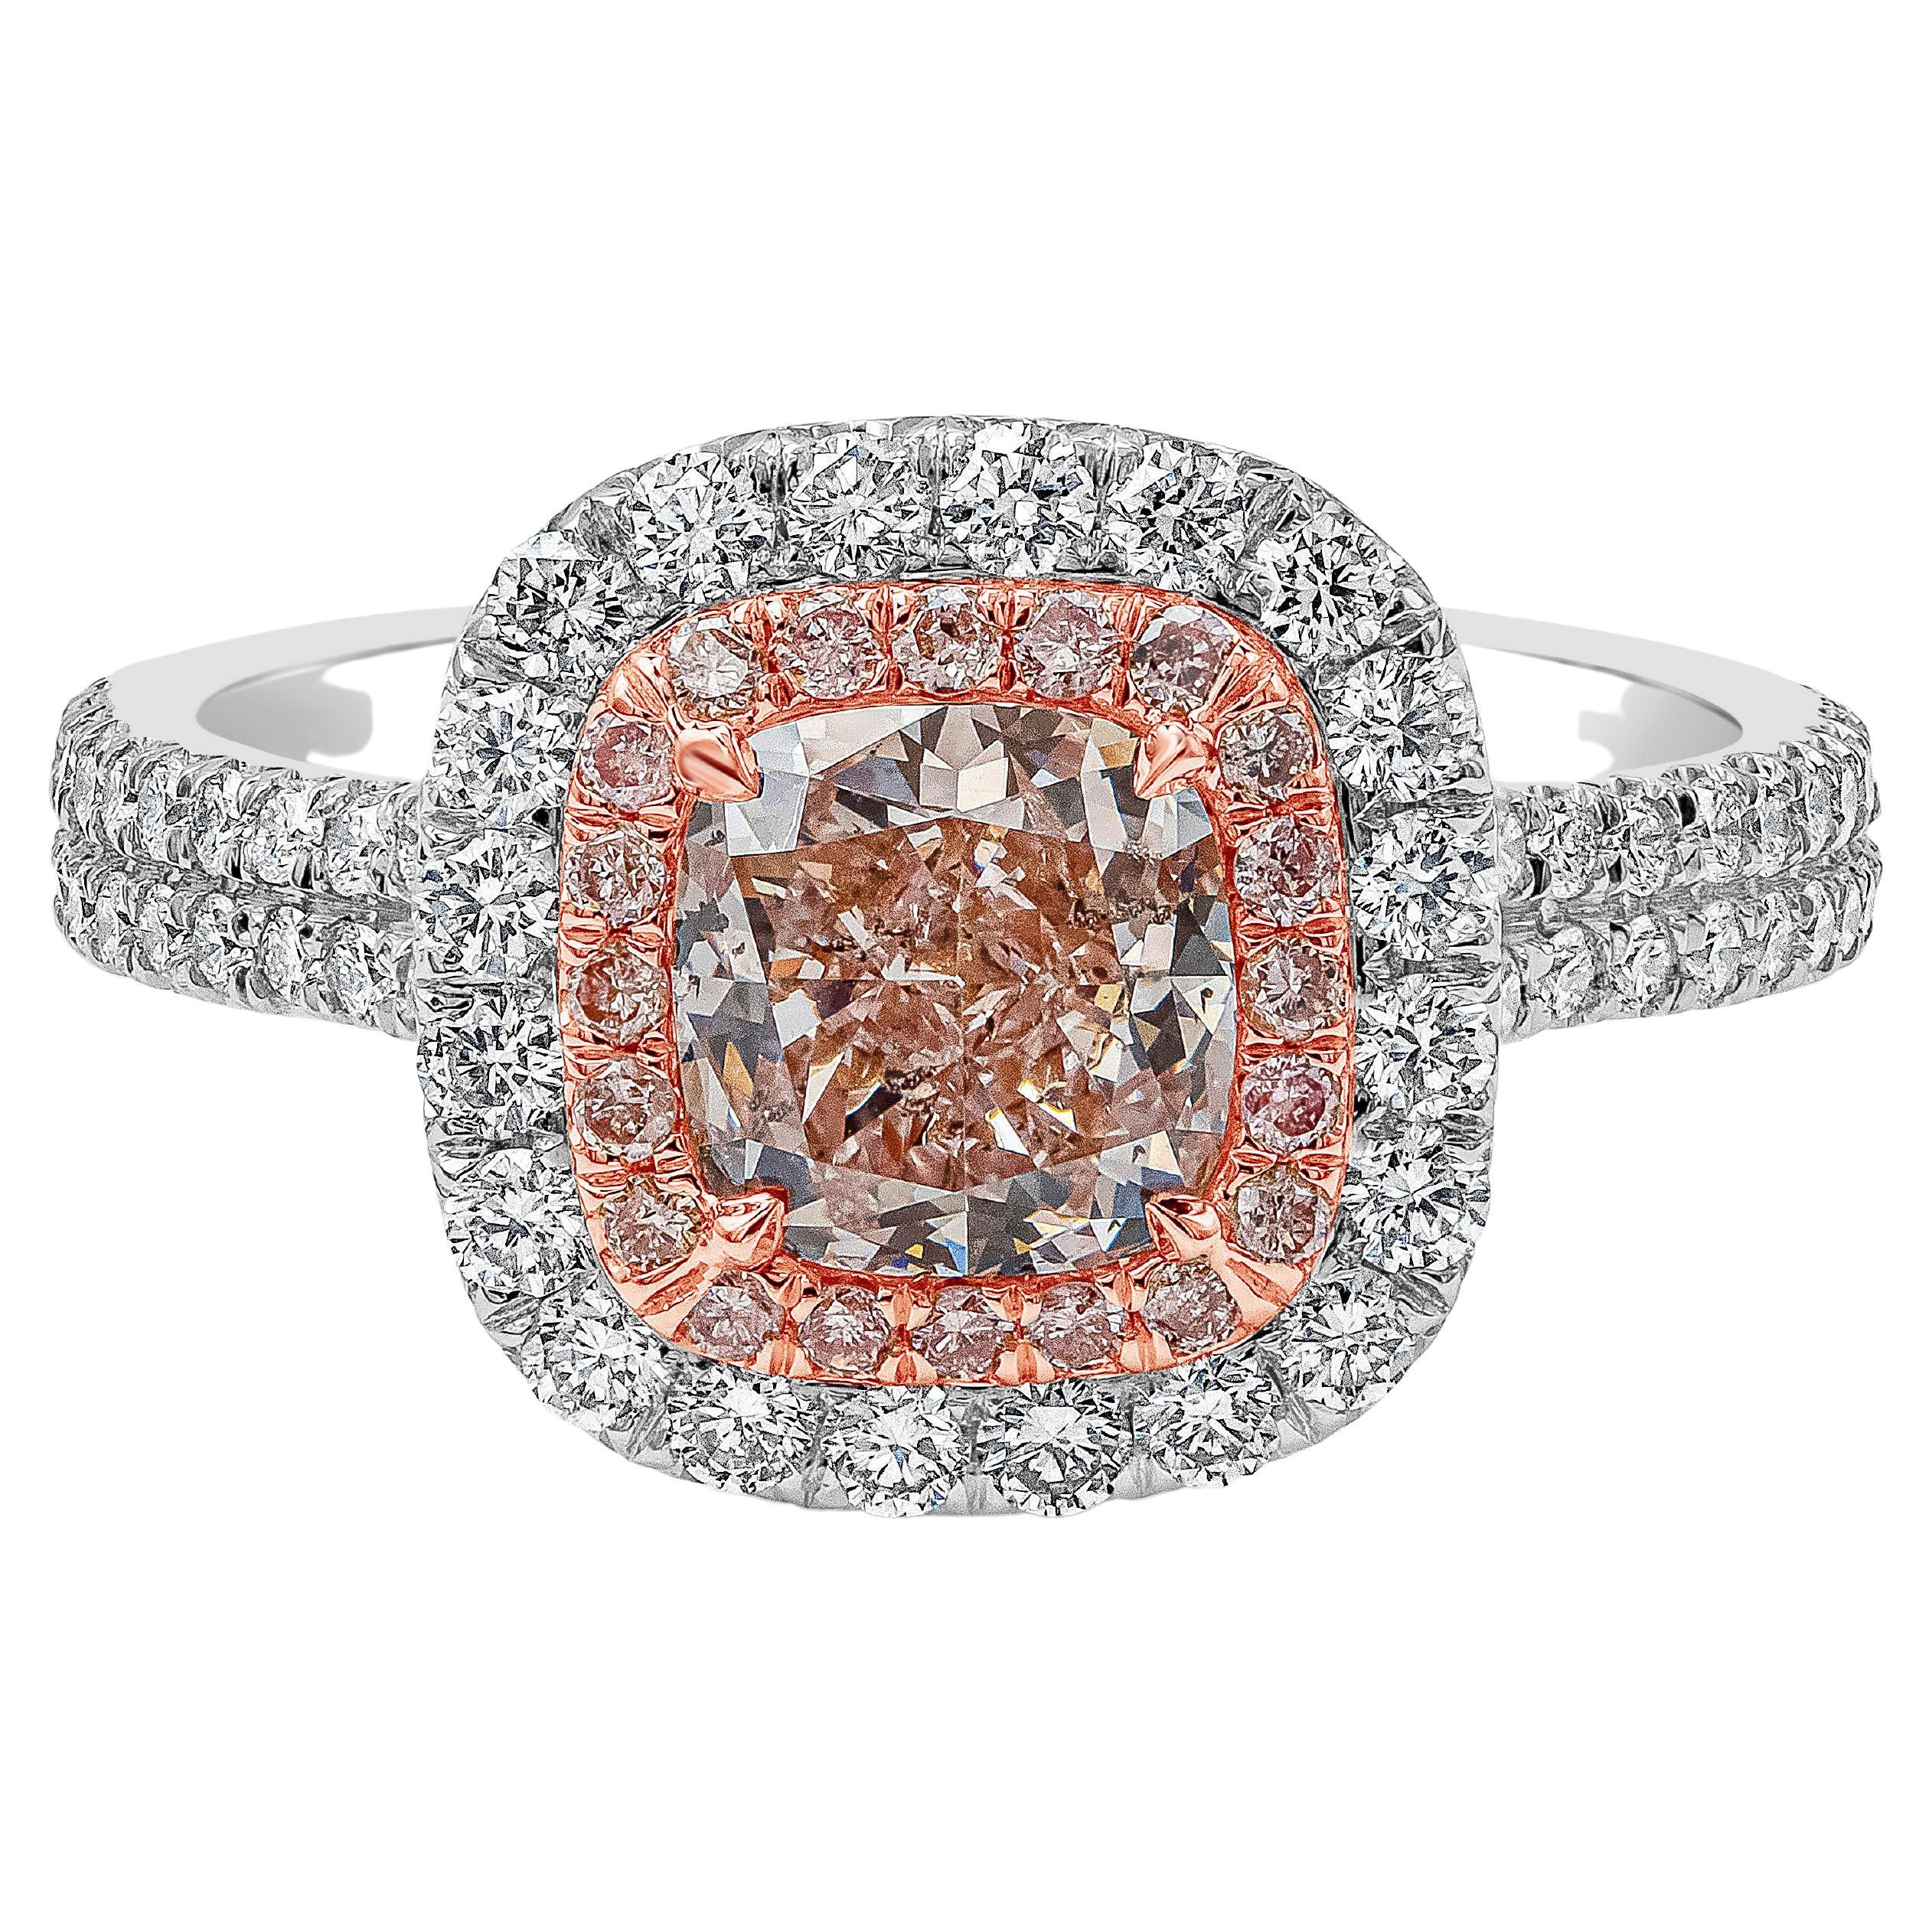 GIA Certified 1.23 Carat Cushion Cut Fancy Light Pink Diamond Engagement Ring